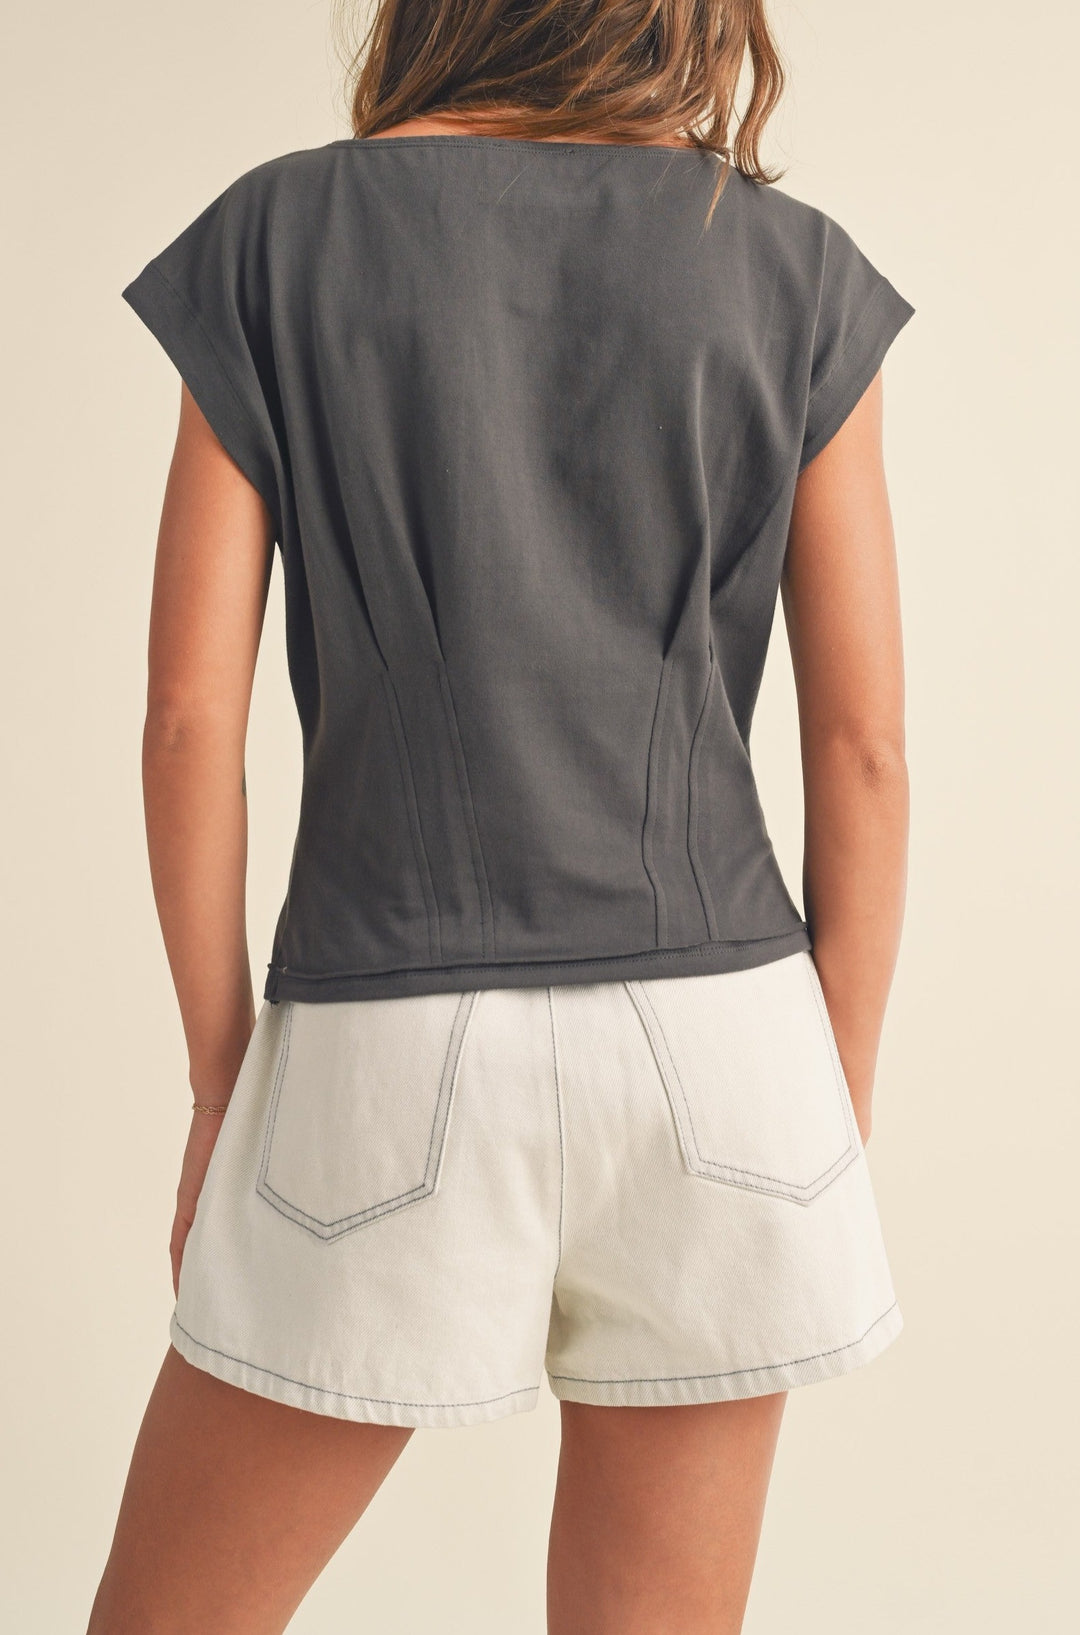 Grey Short Sleeve Corset Style Top